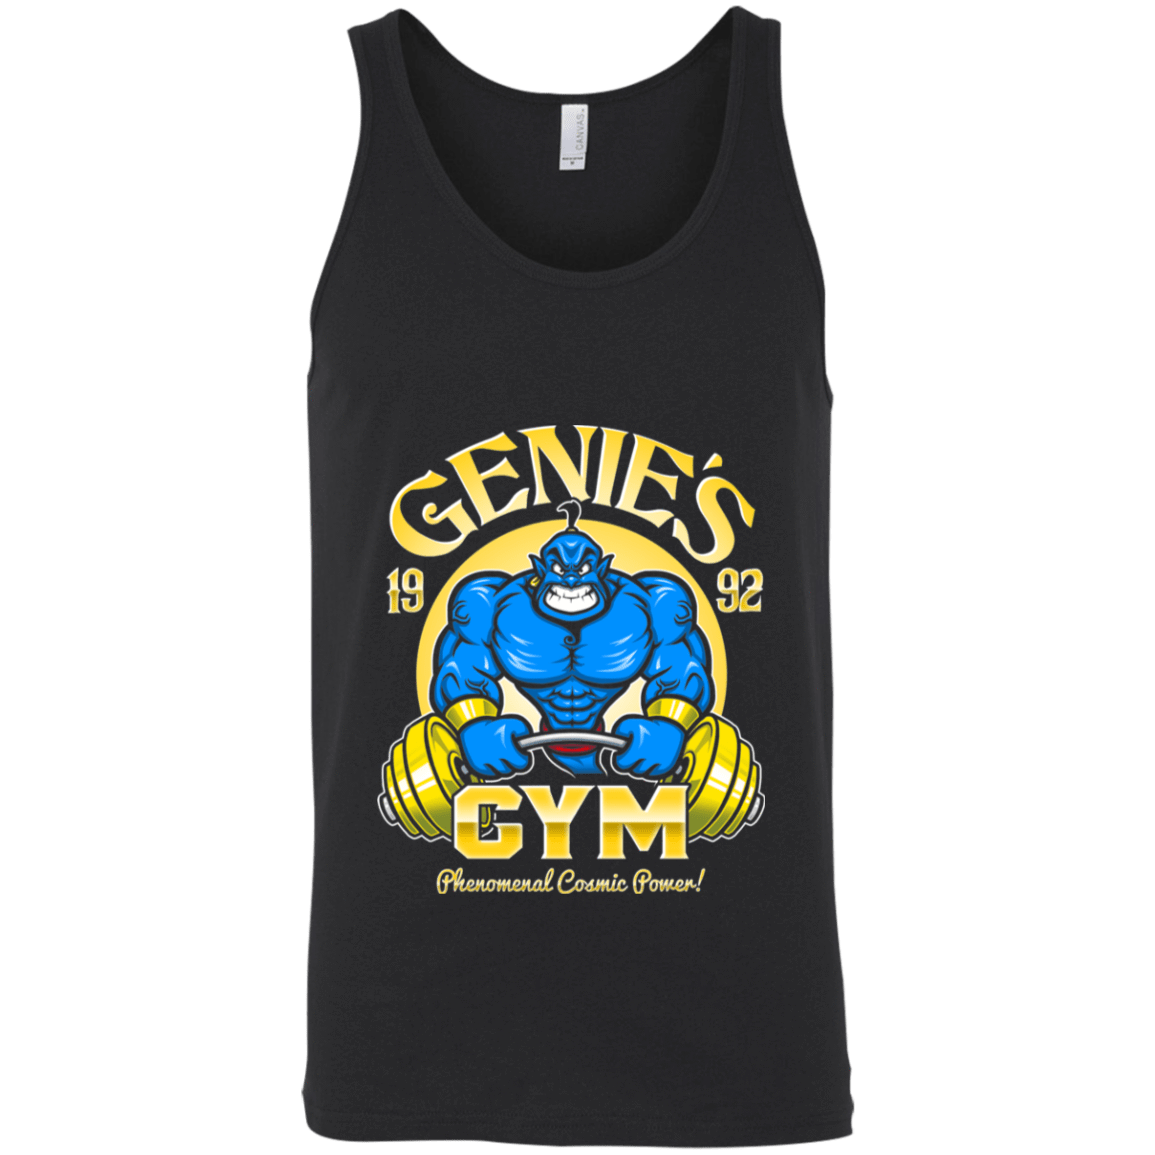 T-Shirts Black / X-Small Genies Gym Unisex Premium Tank Top